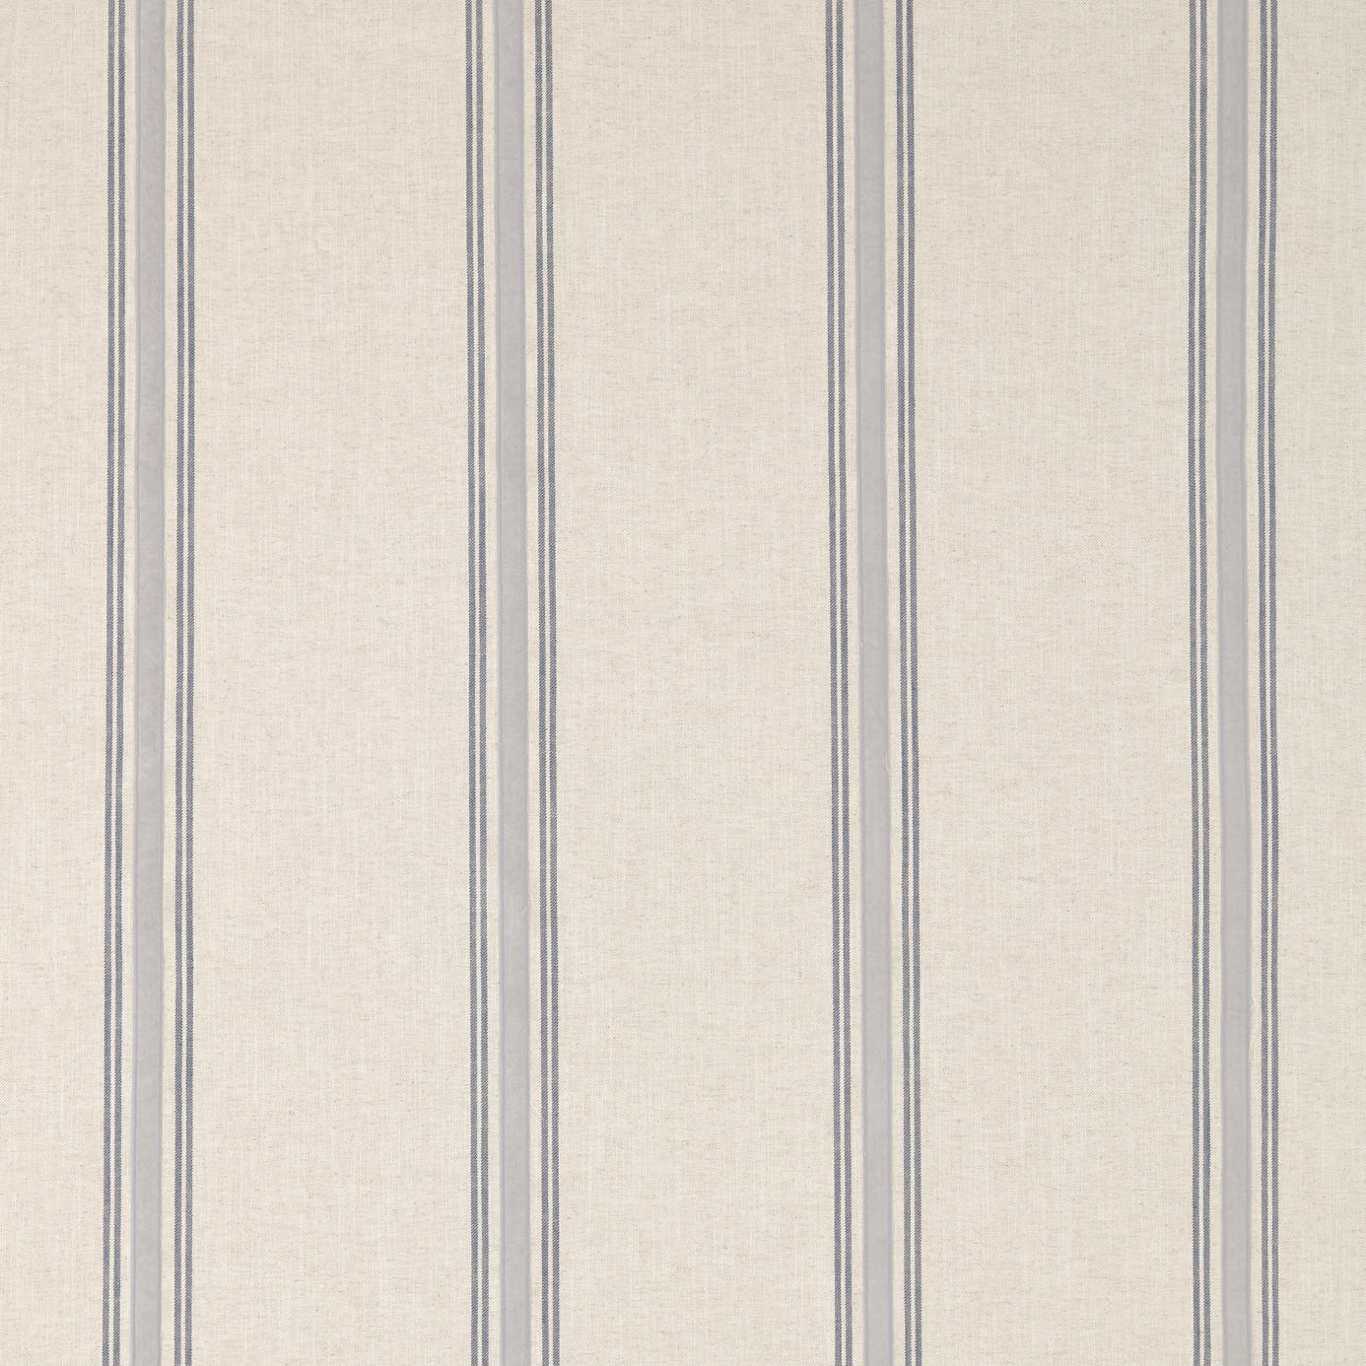 Hockley Stripe Fabric by Sanderson Home